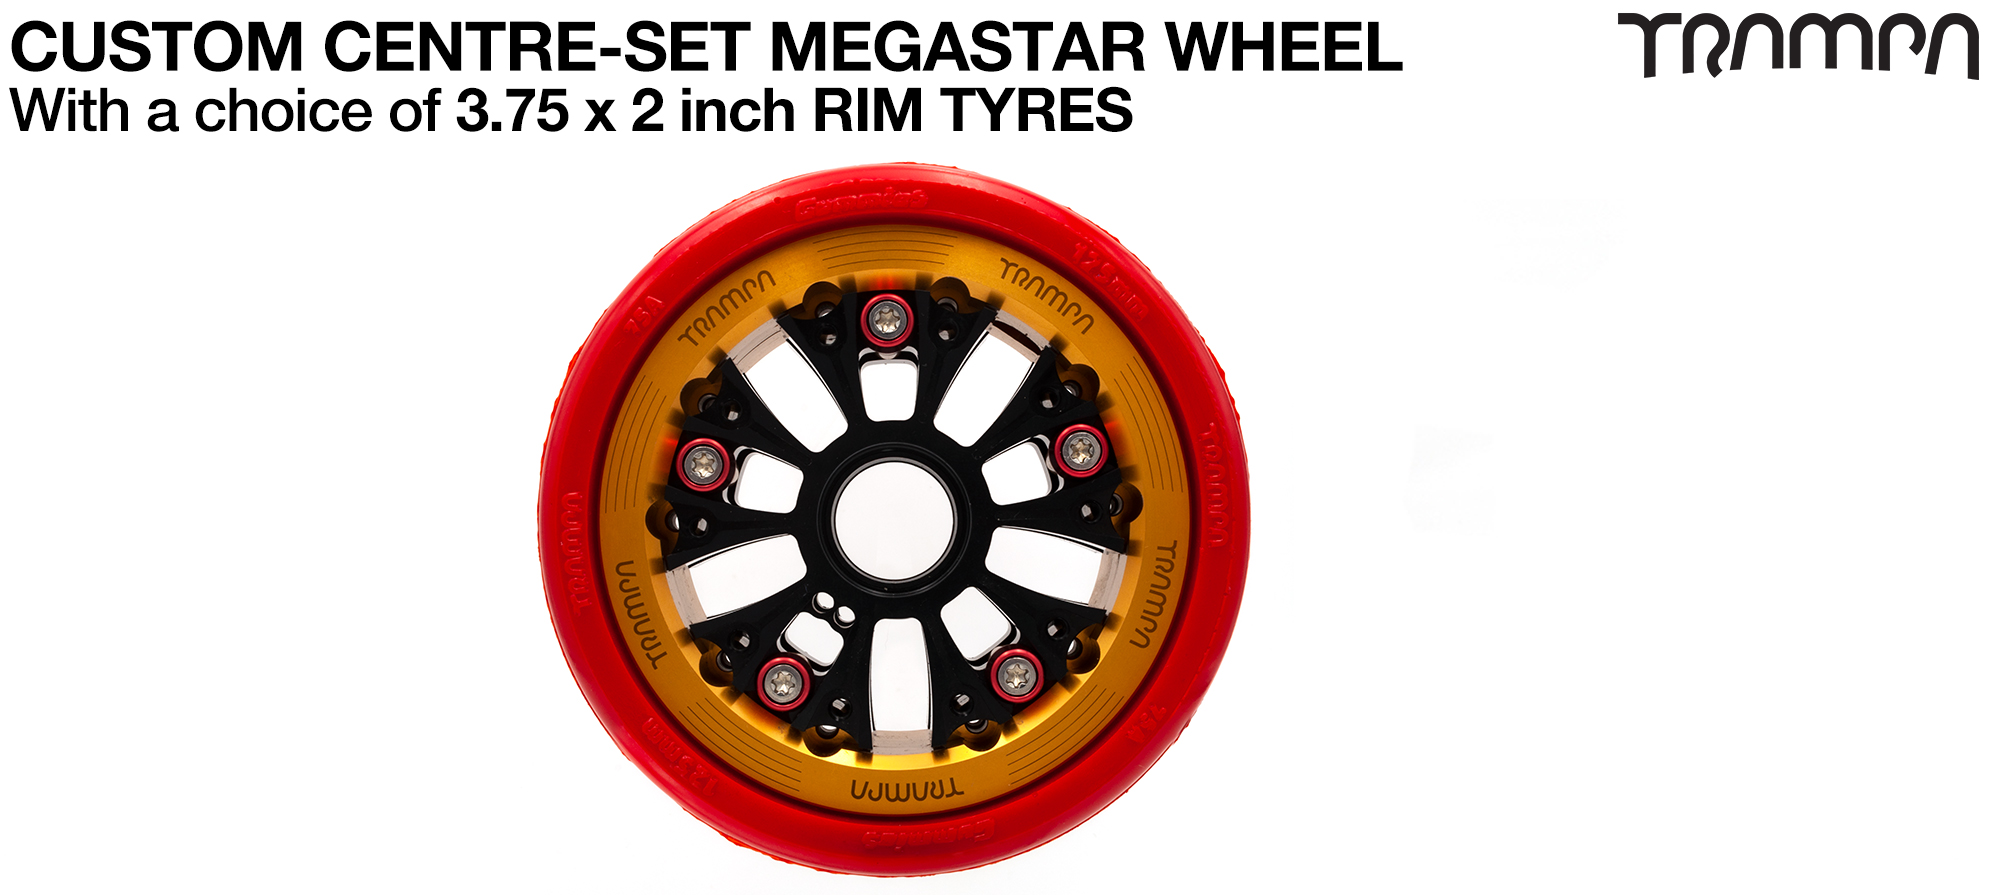 MEGASTAR 8 CENTRE-SET Wheel - 5 Inch GUMMIES  (£75)